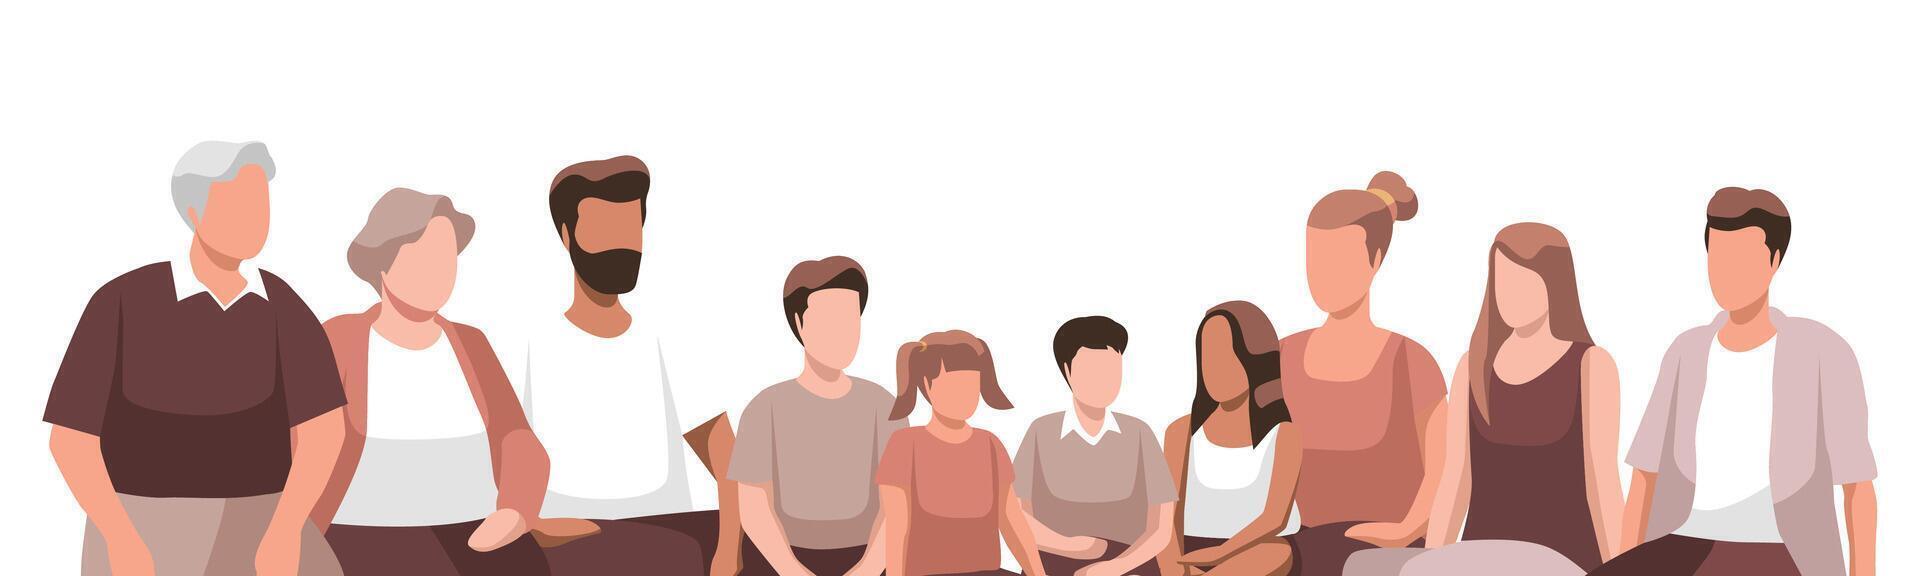 People group diversity art illustration vector